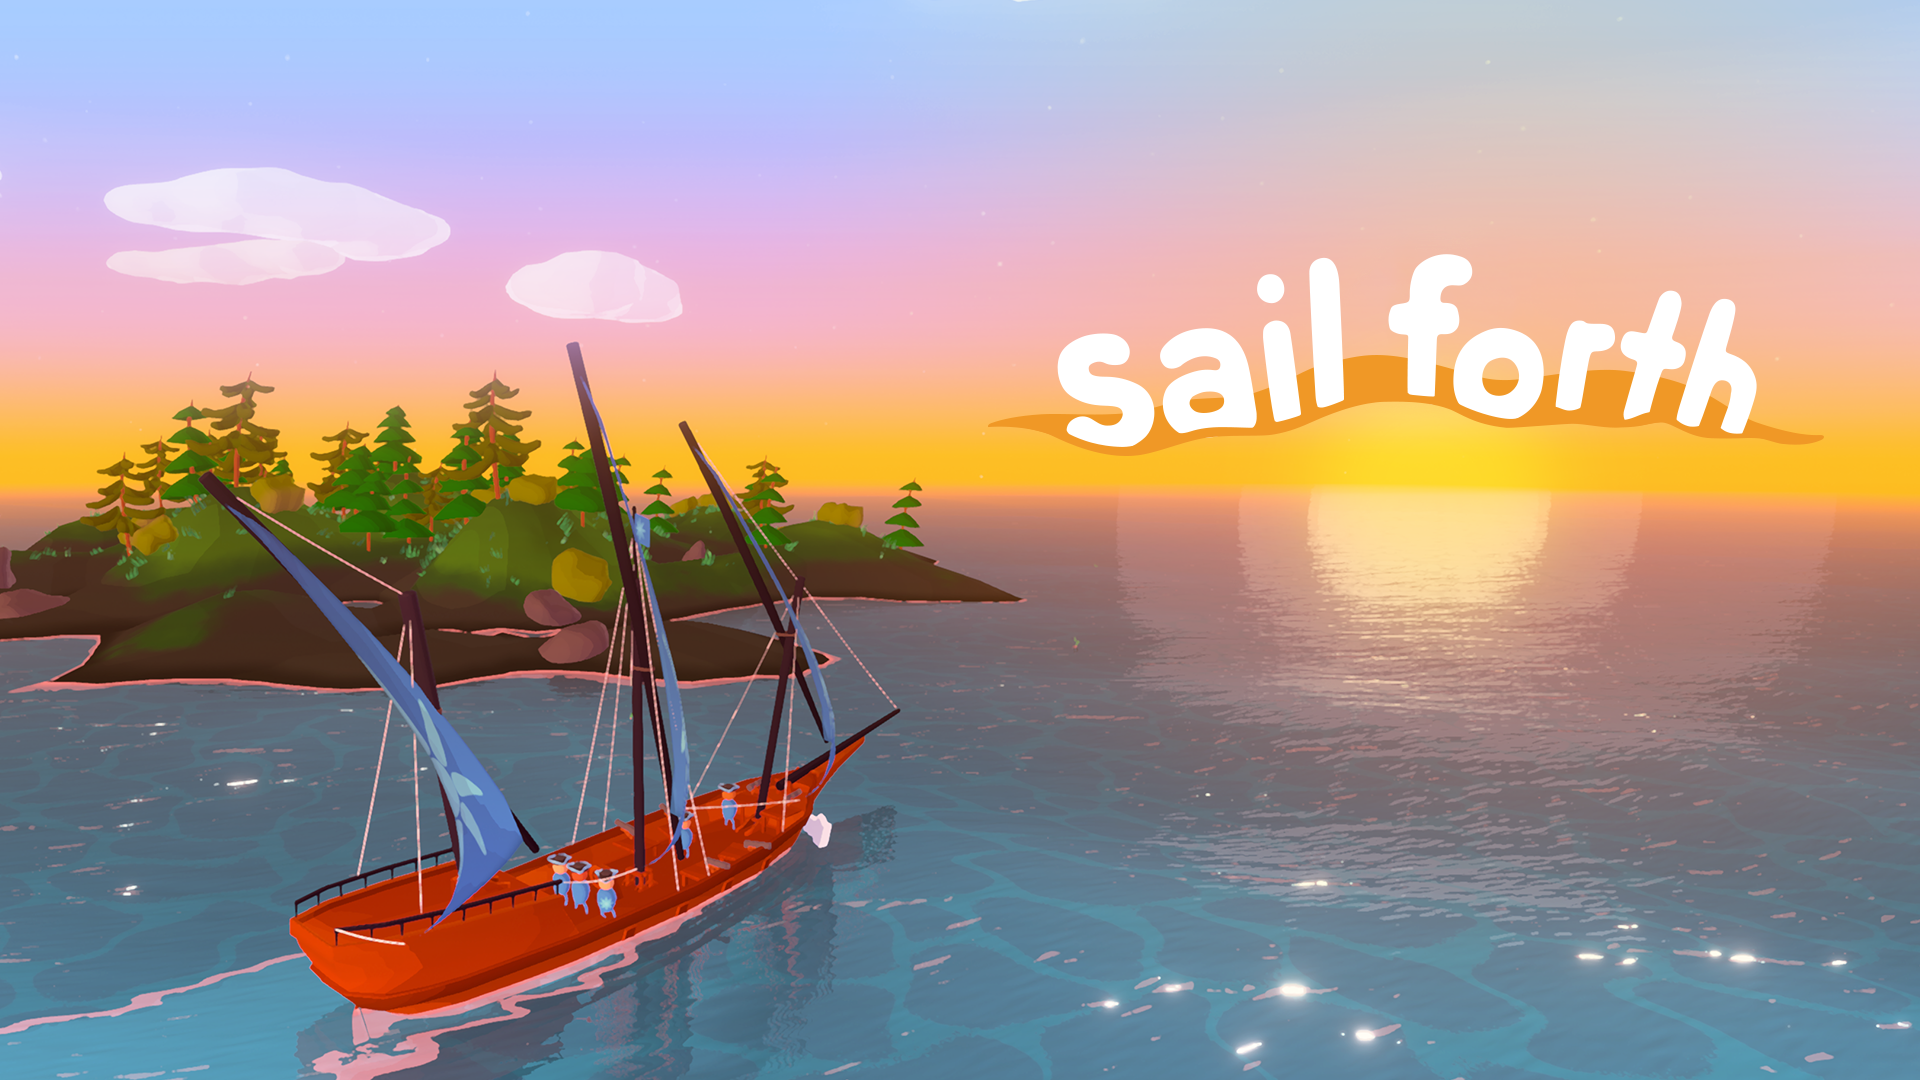 Sail Forth